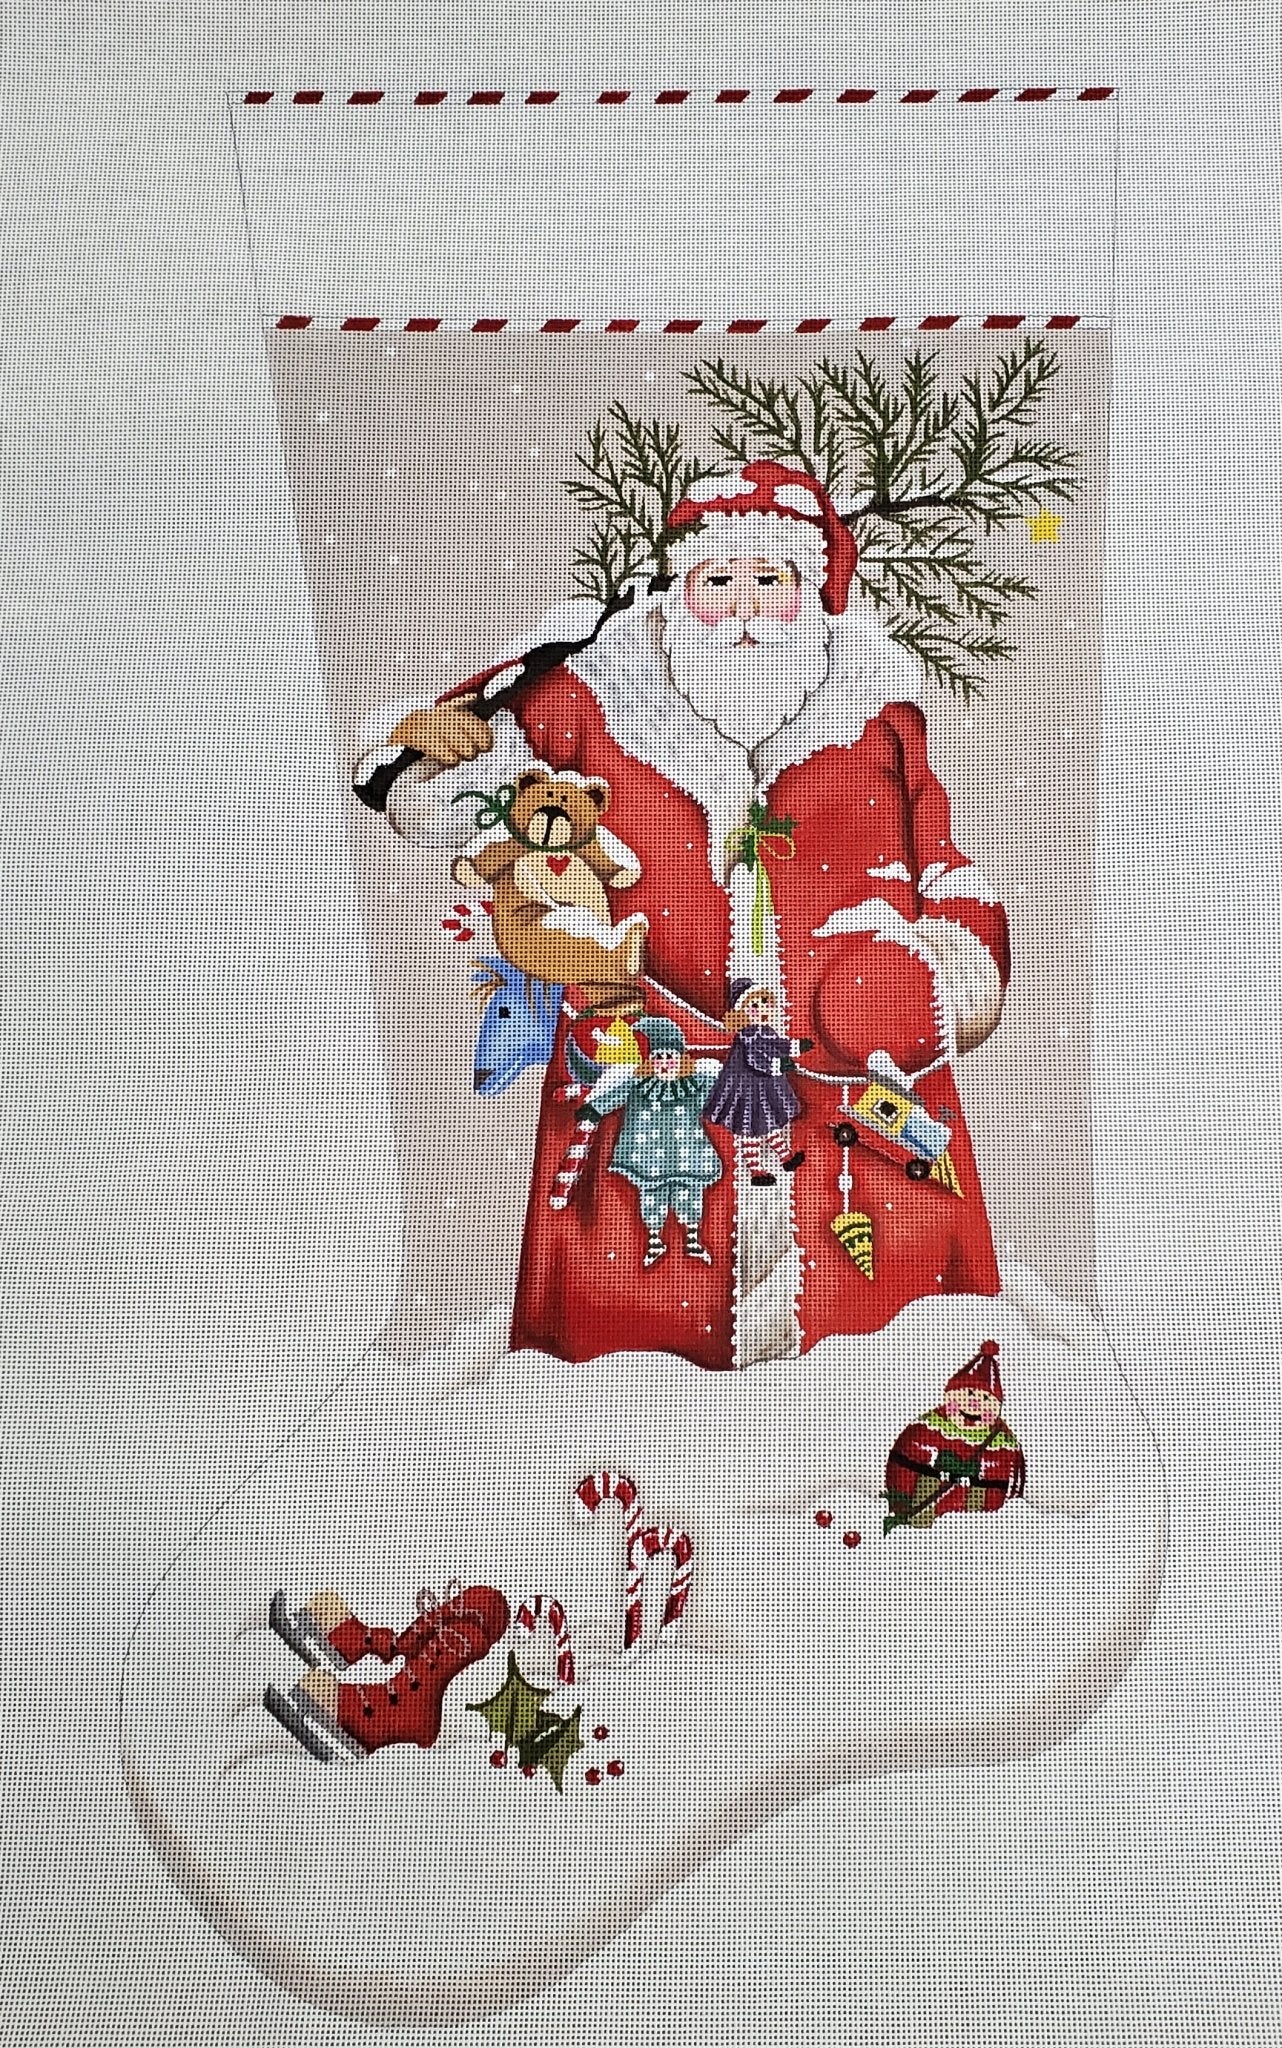 Snowy Santa Stocking - The Flying Needles